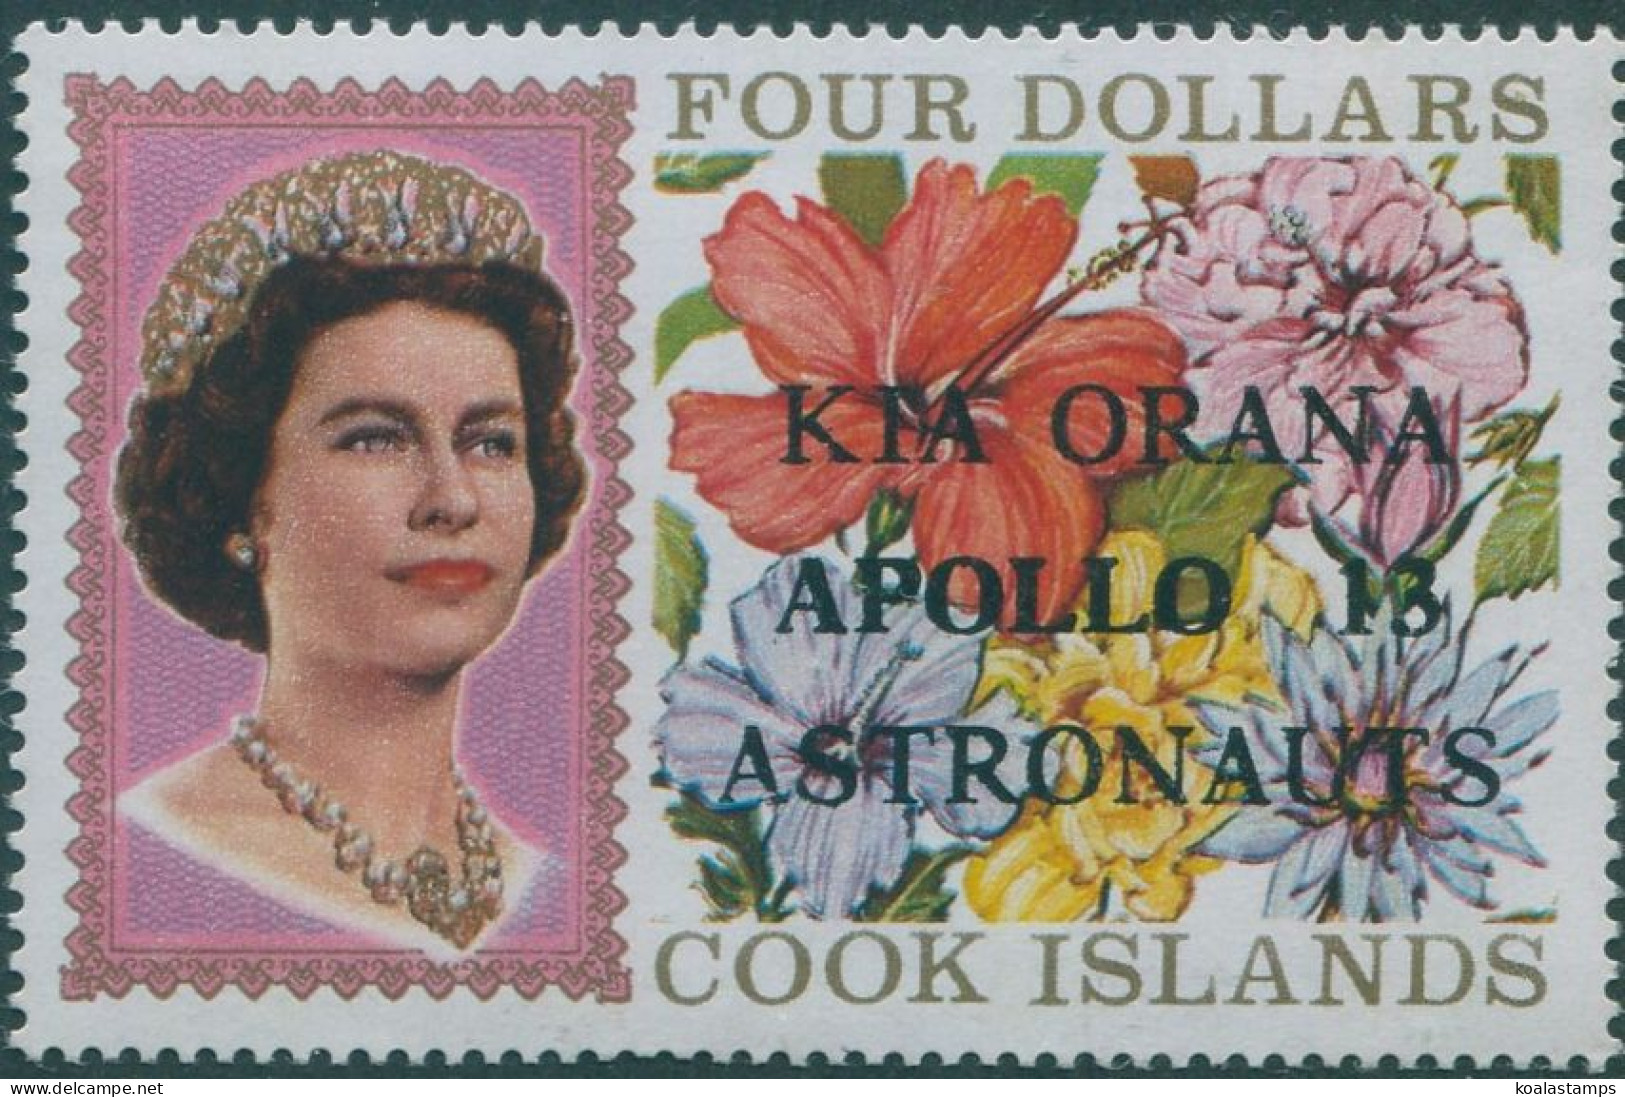 Cook Islands 1970 SG327 $4 QEII Flowers KIA ORANA APOLLO 13 ASTRONAUTS Ovpt MLH - Cookinseln